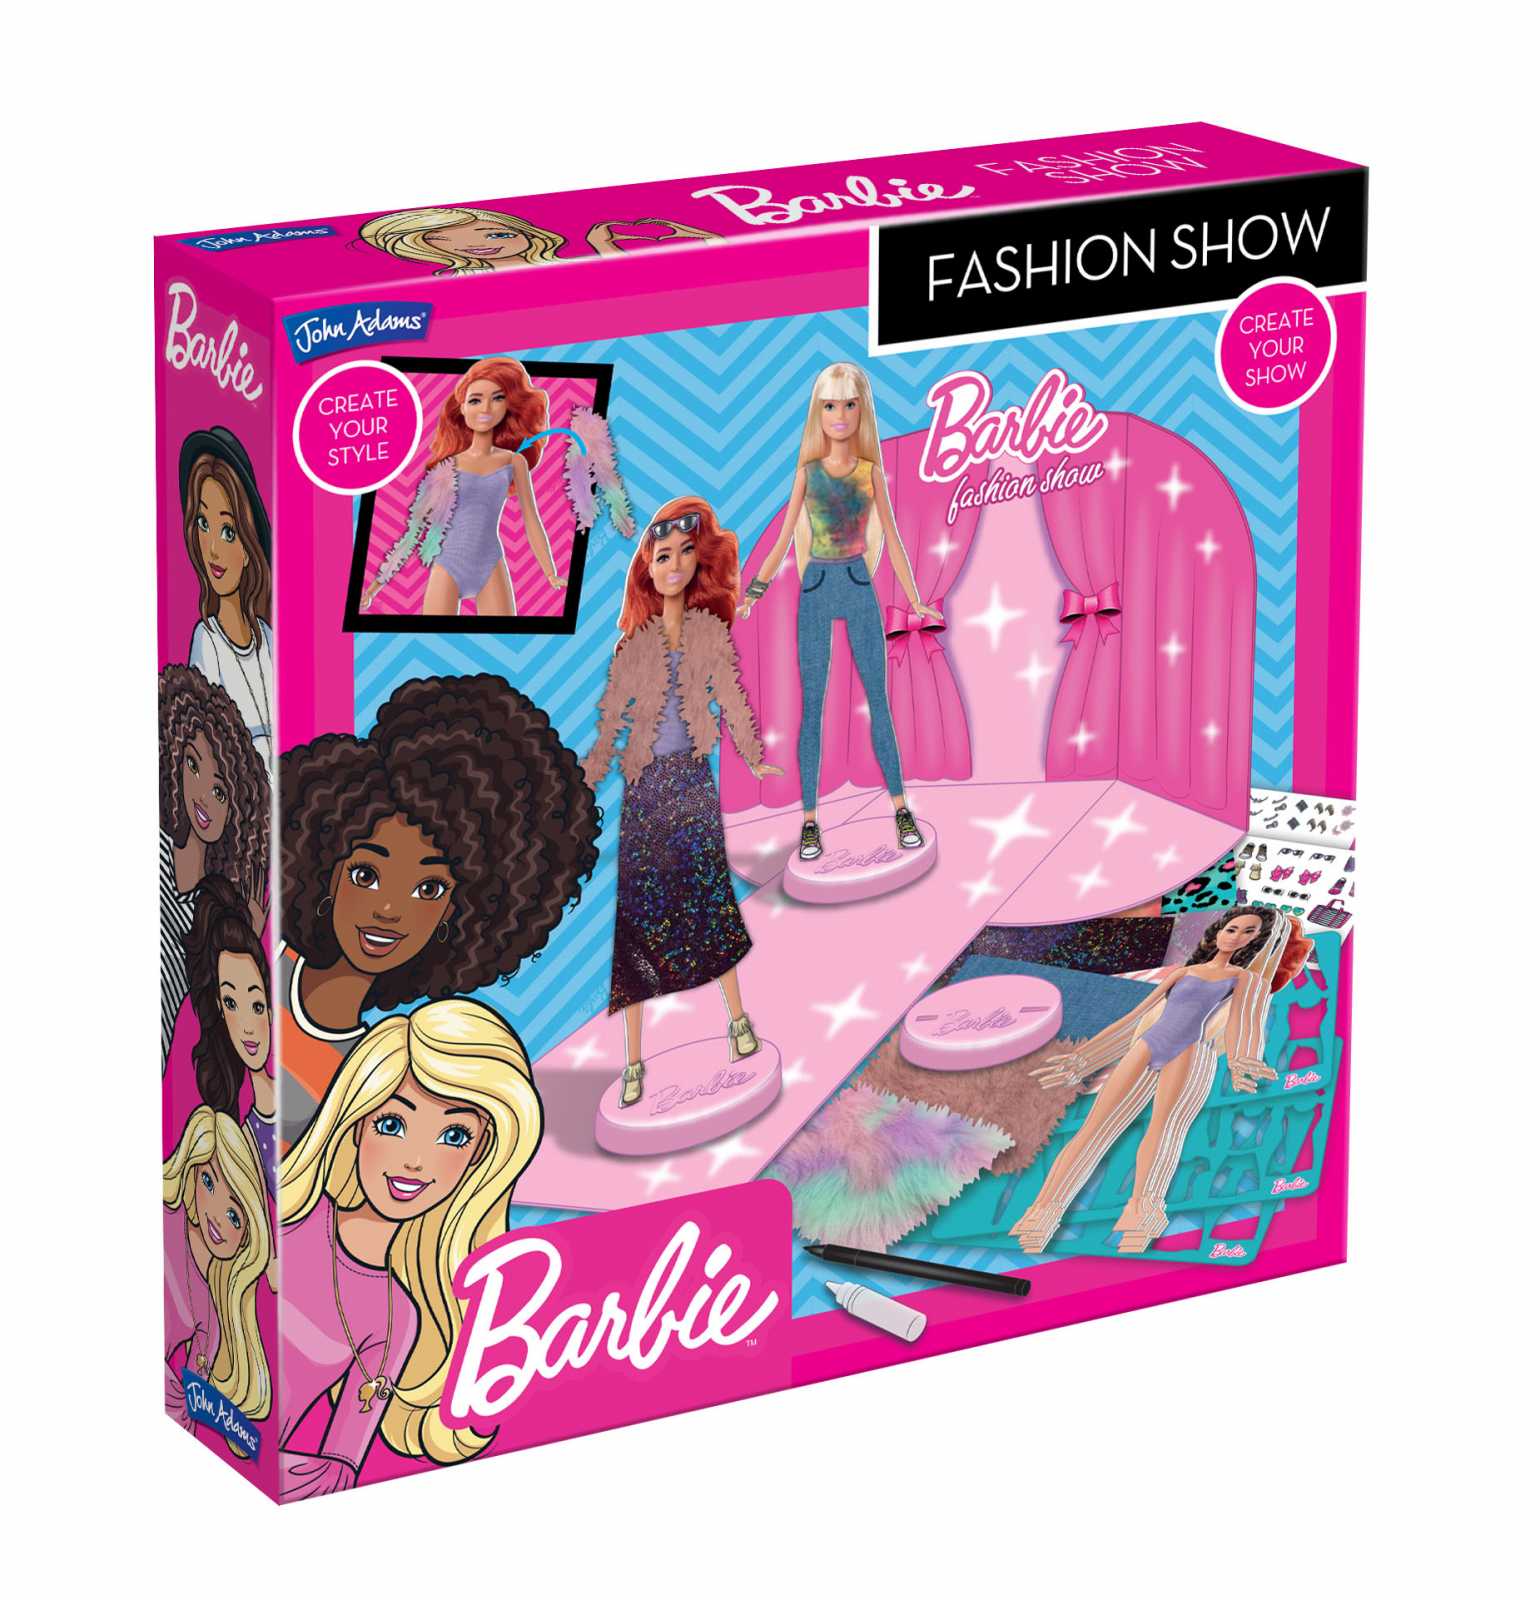 Barbie Fashion Show - John Adams